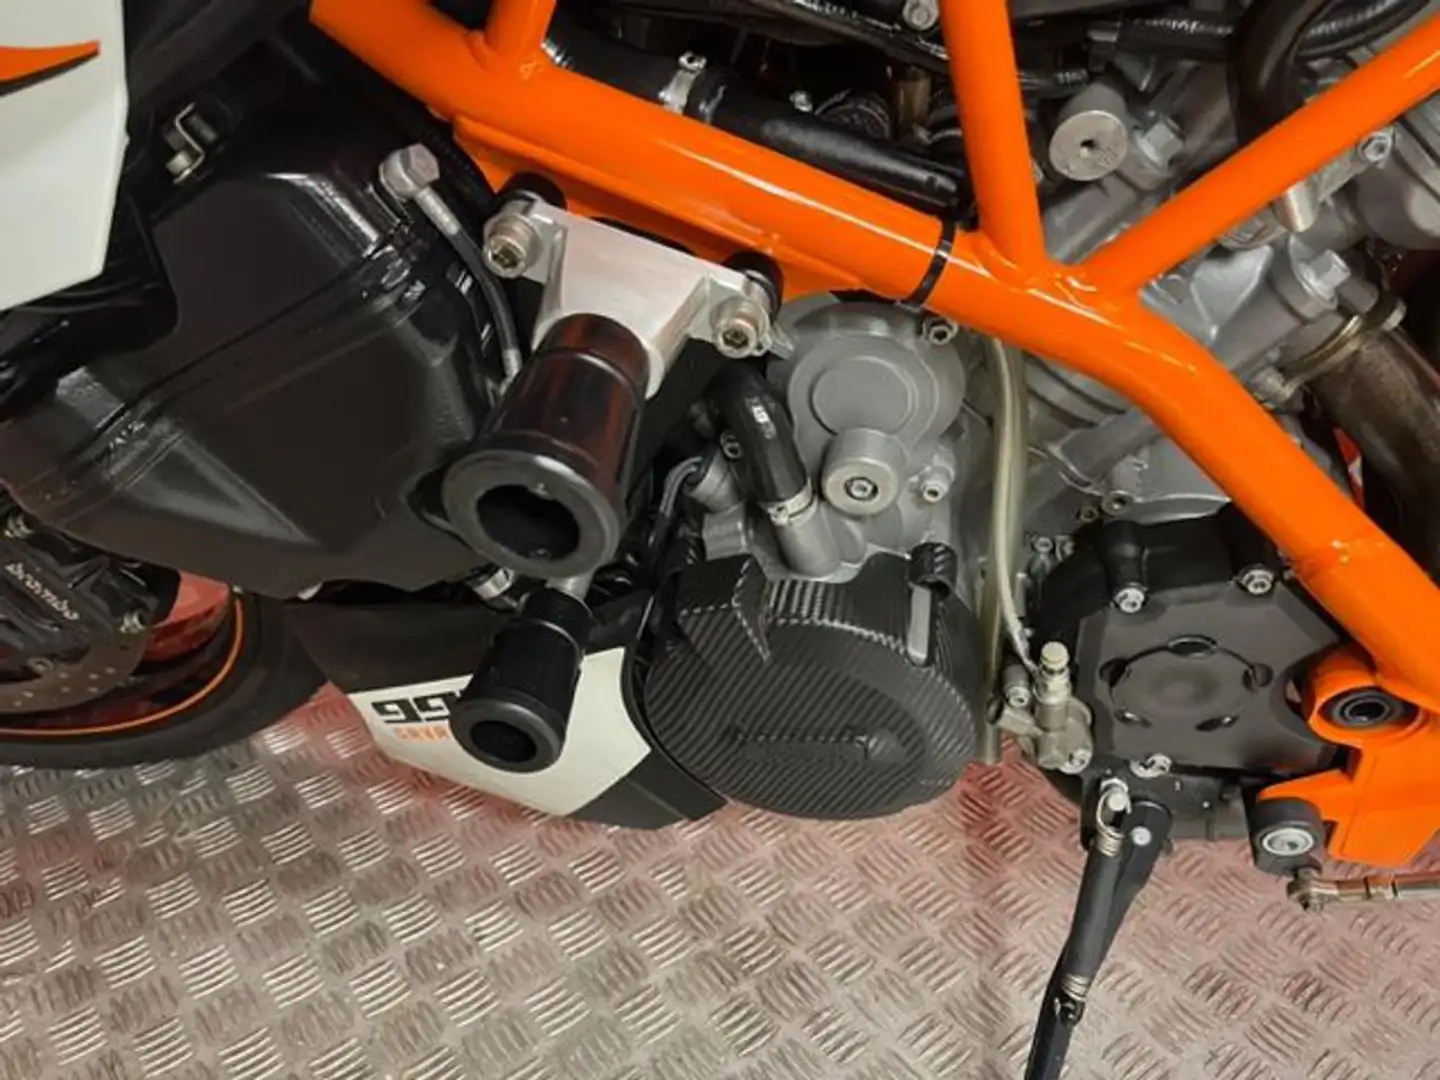 KTM 990 Super Duke R 2012 Orange - 2